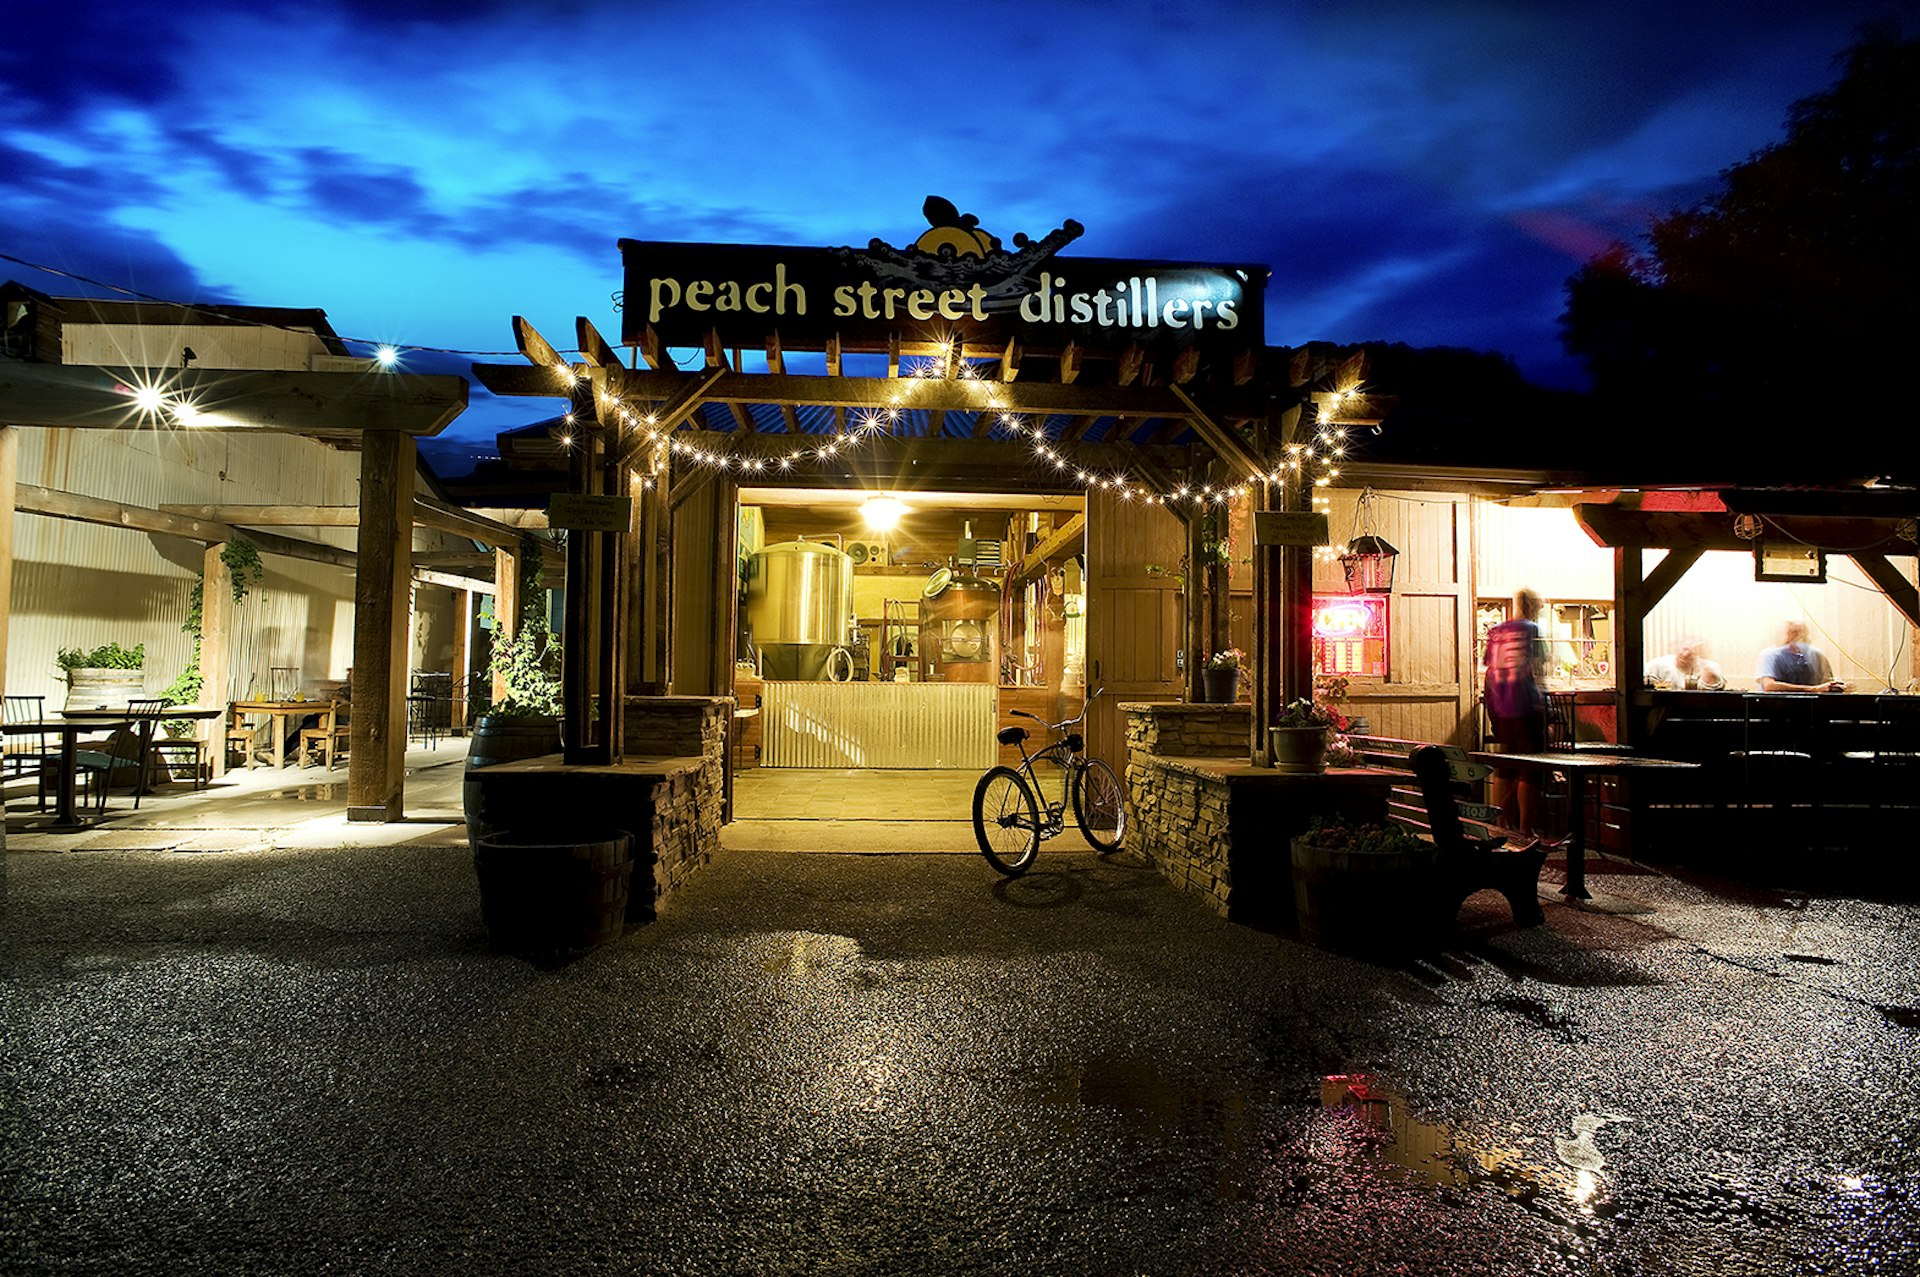 Peach Street Distillers at night. Image courtesy of Peach Street Distillers